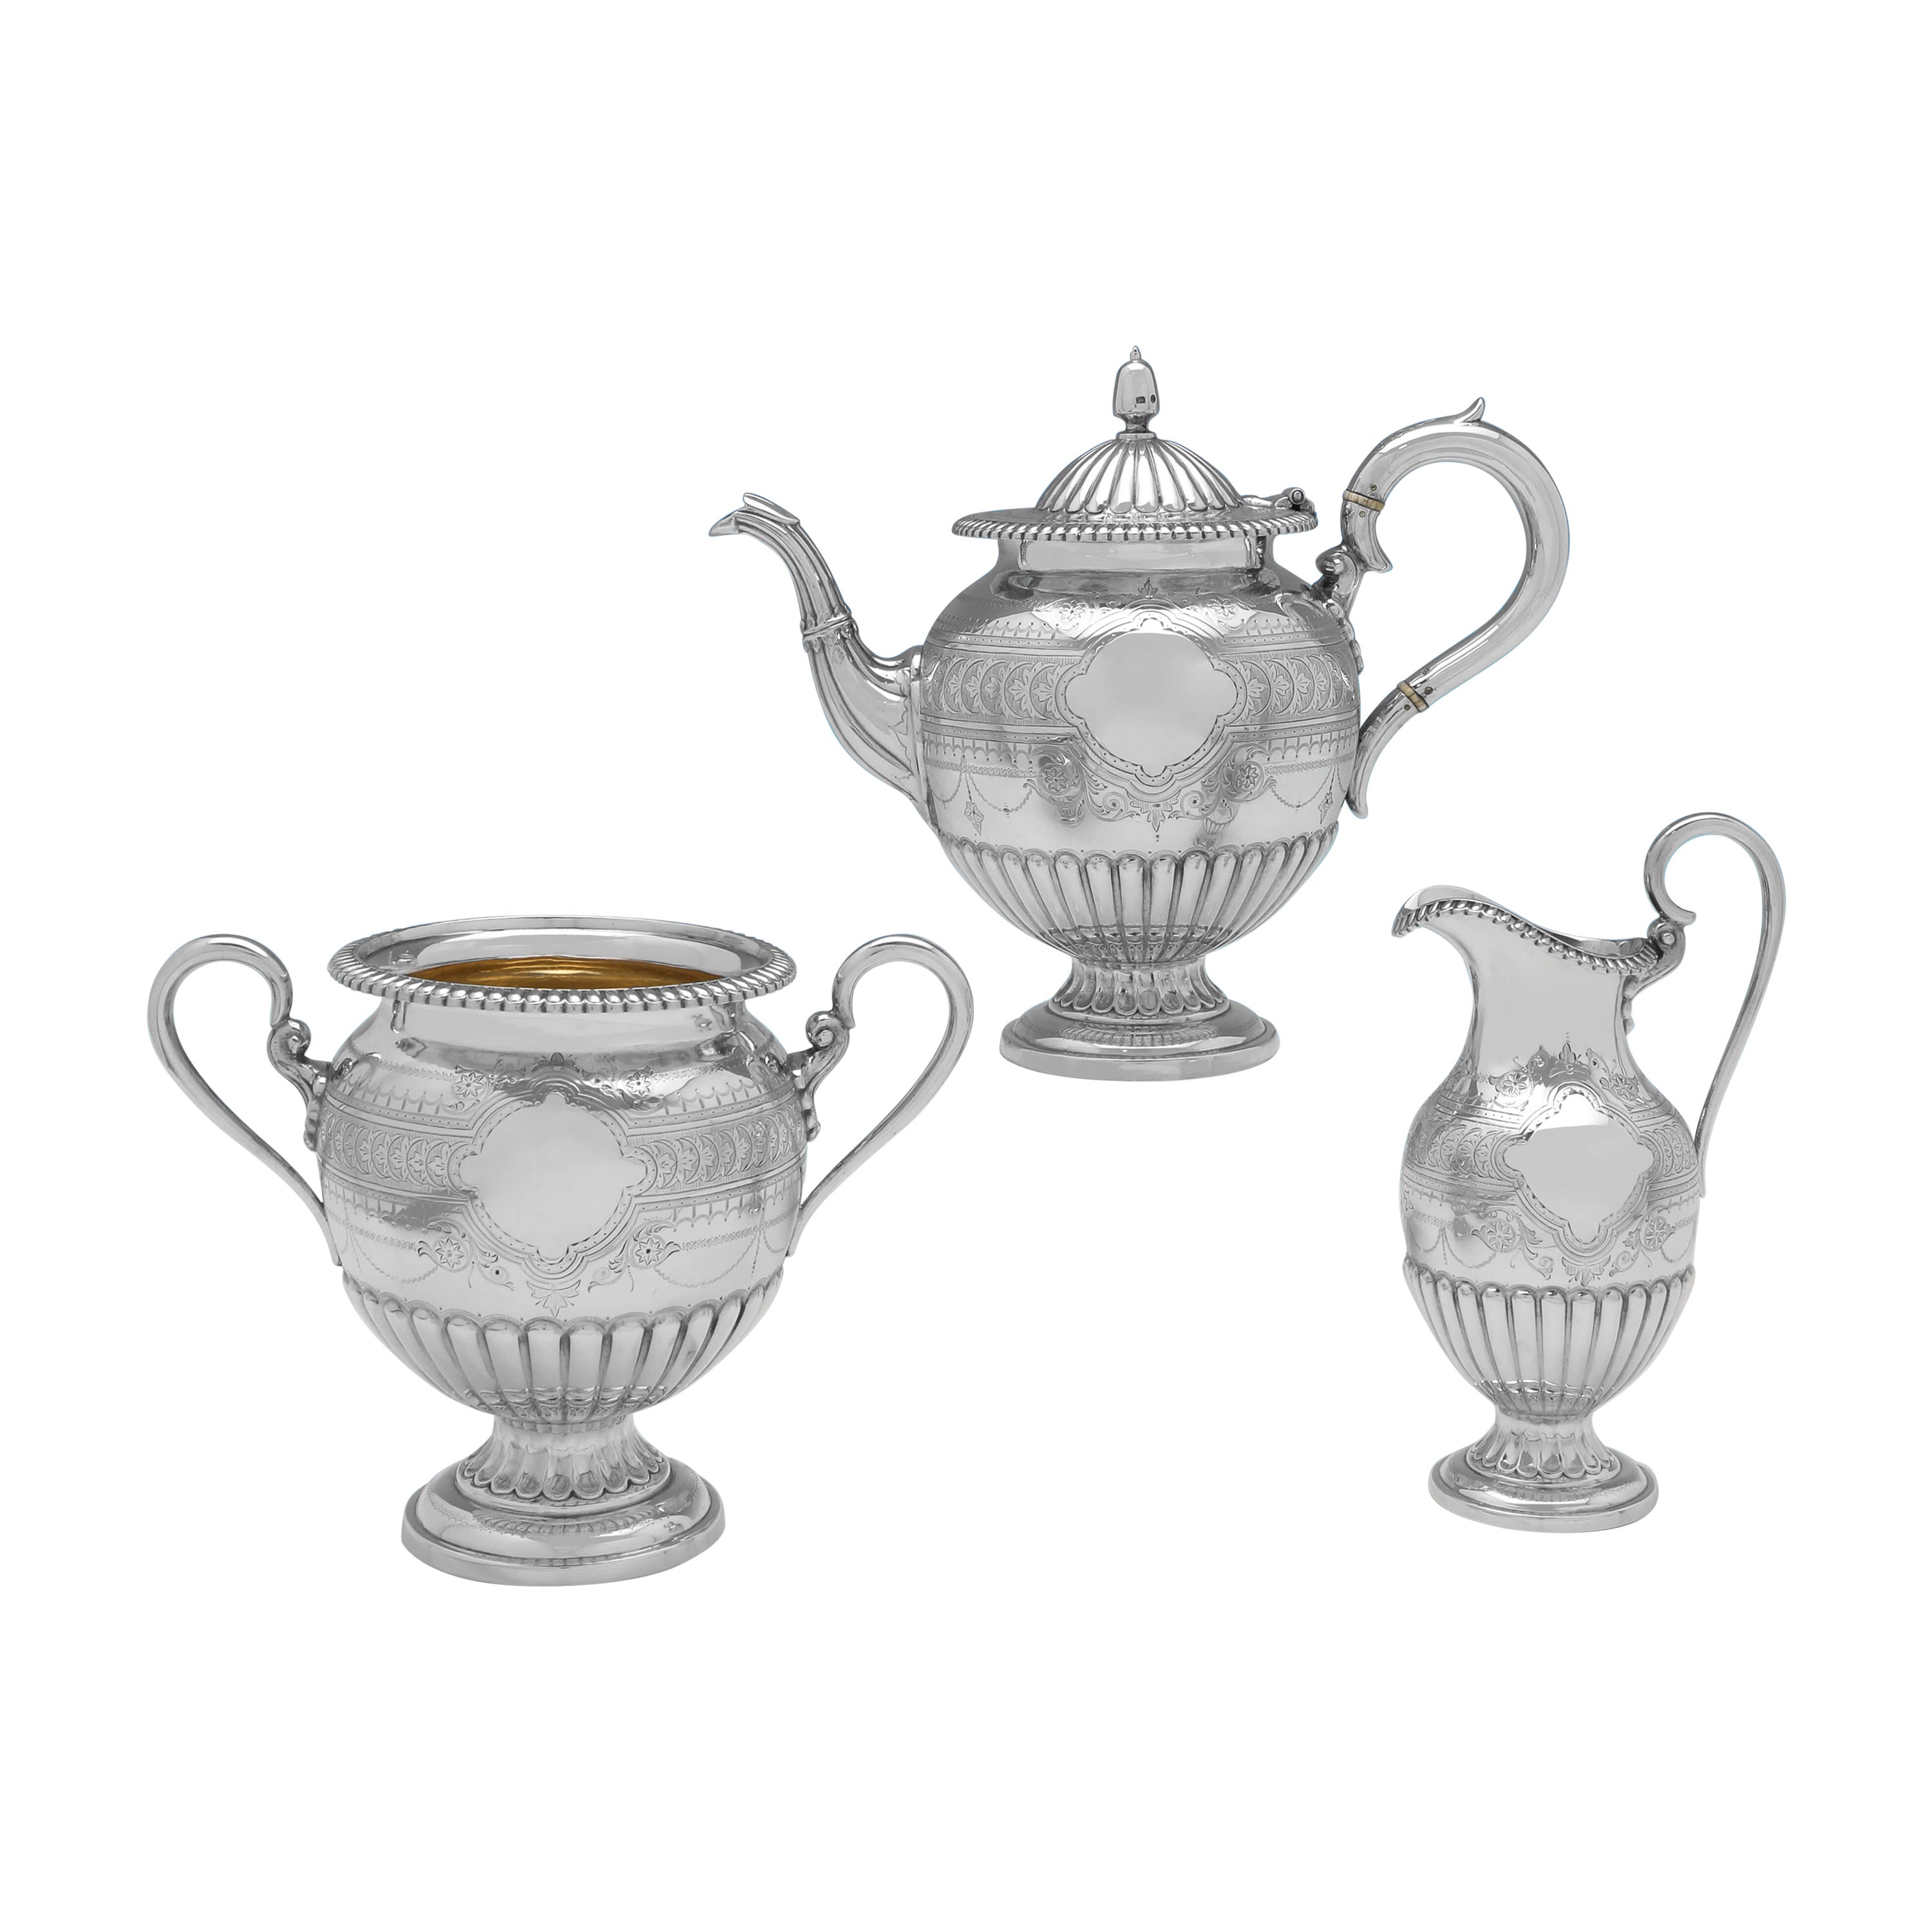 Engraved Victorian Sterling Silver Tea Set - 3 Piece - Urn Shape - 1876